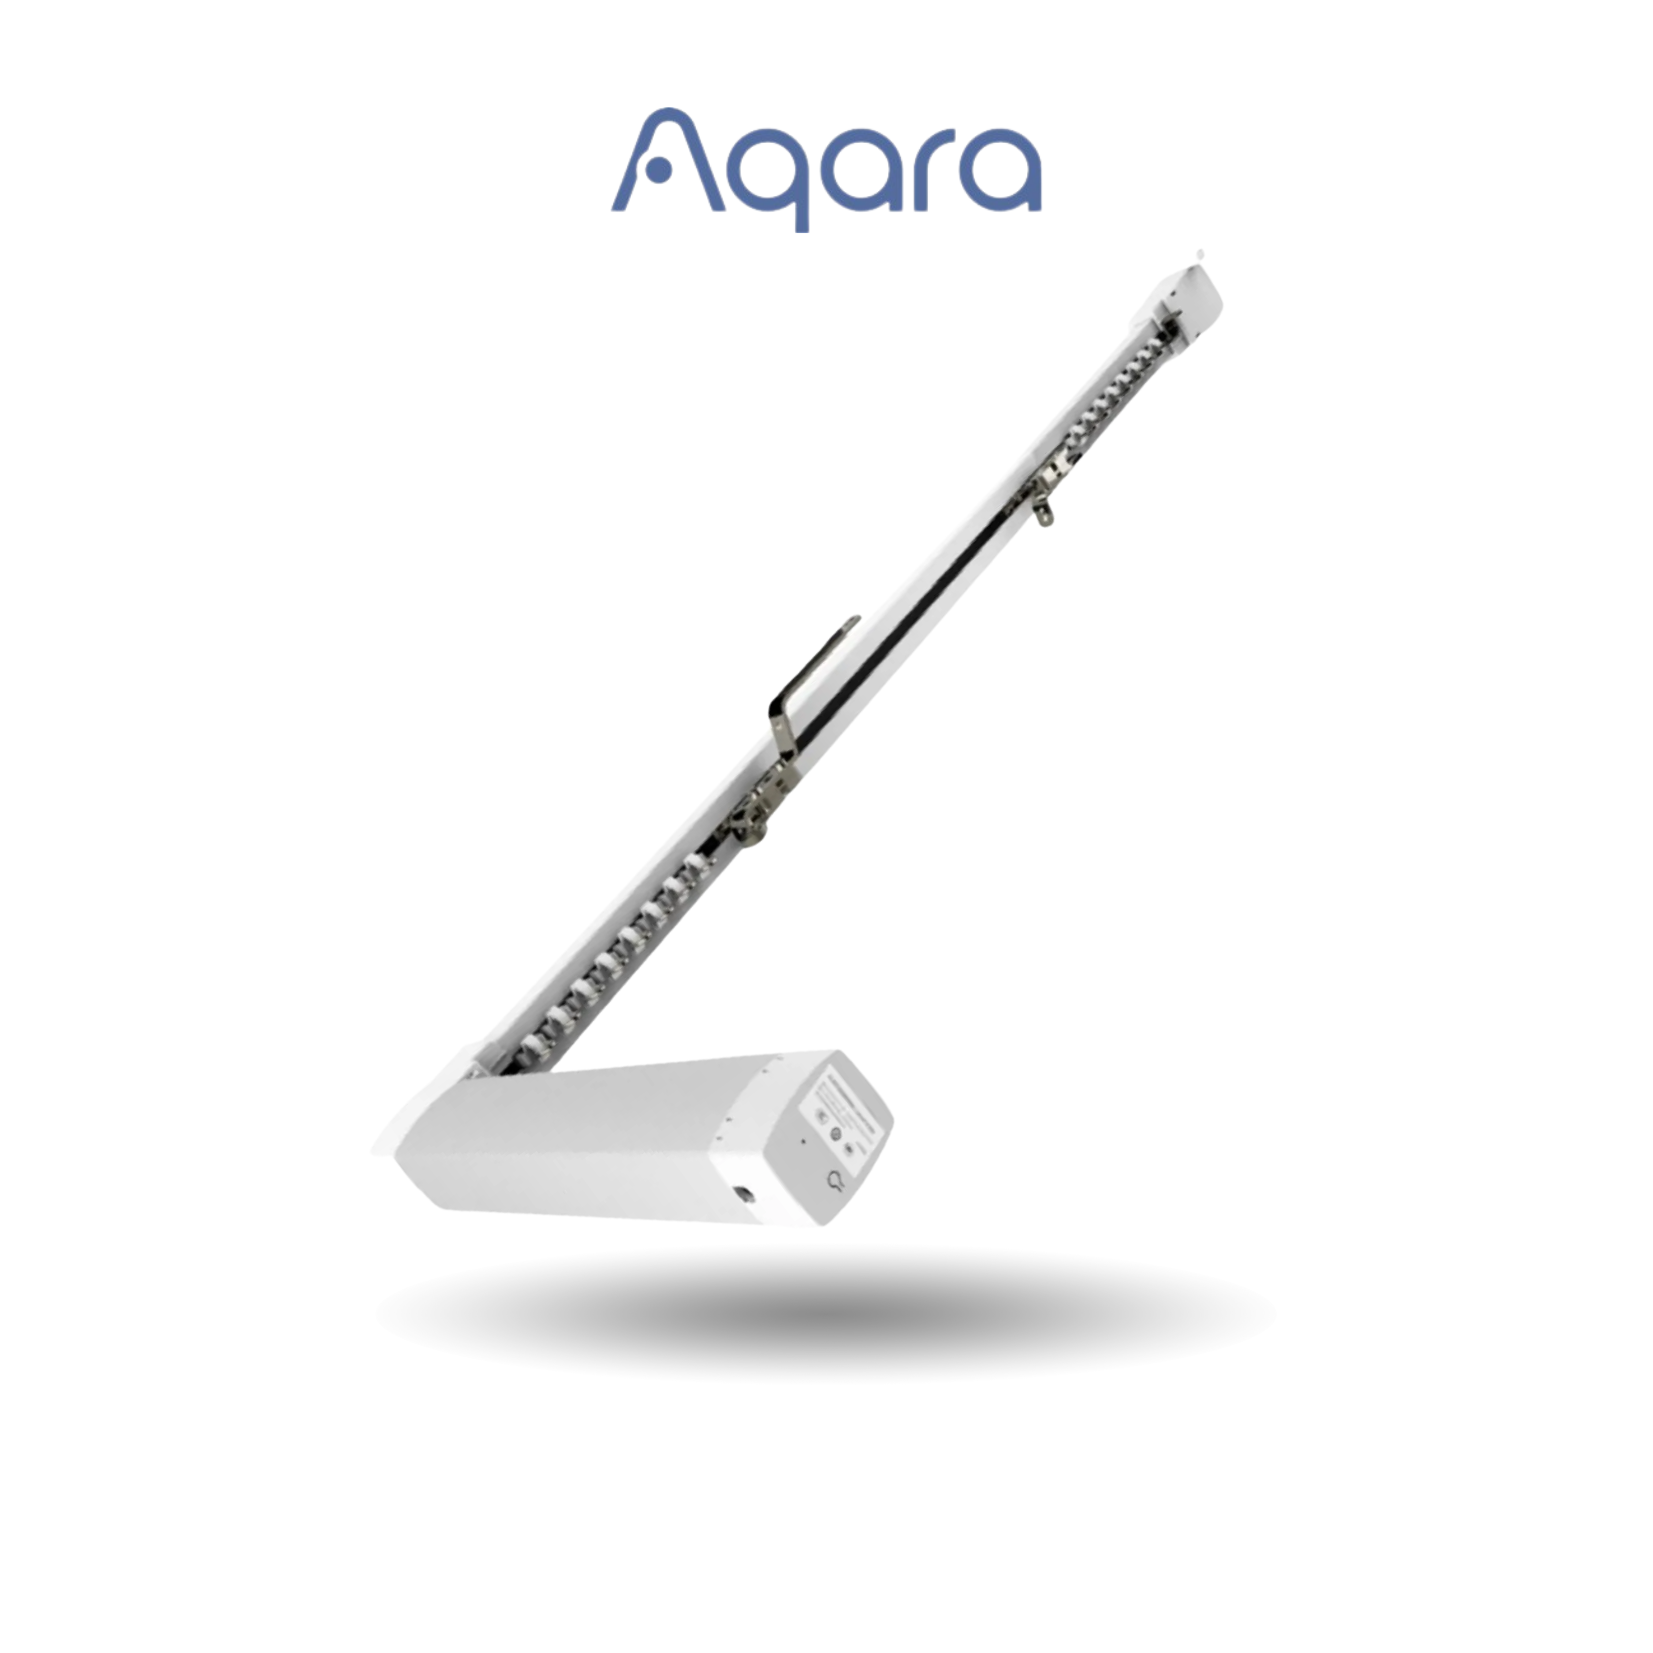 Aqara Smart Curtain Solution Product Image 1